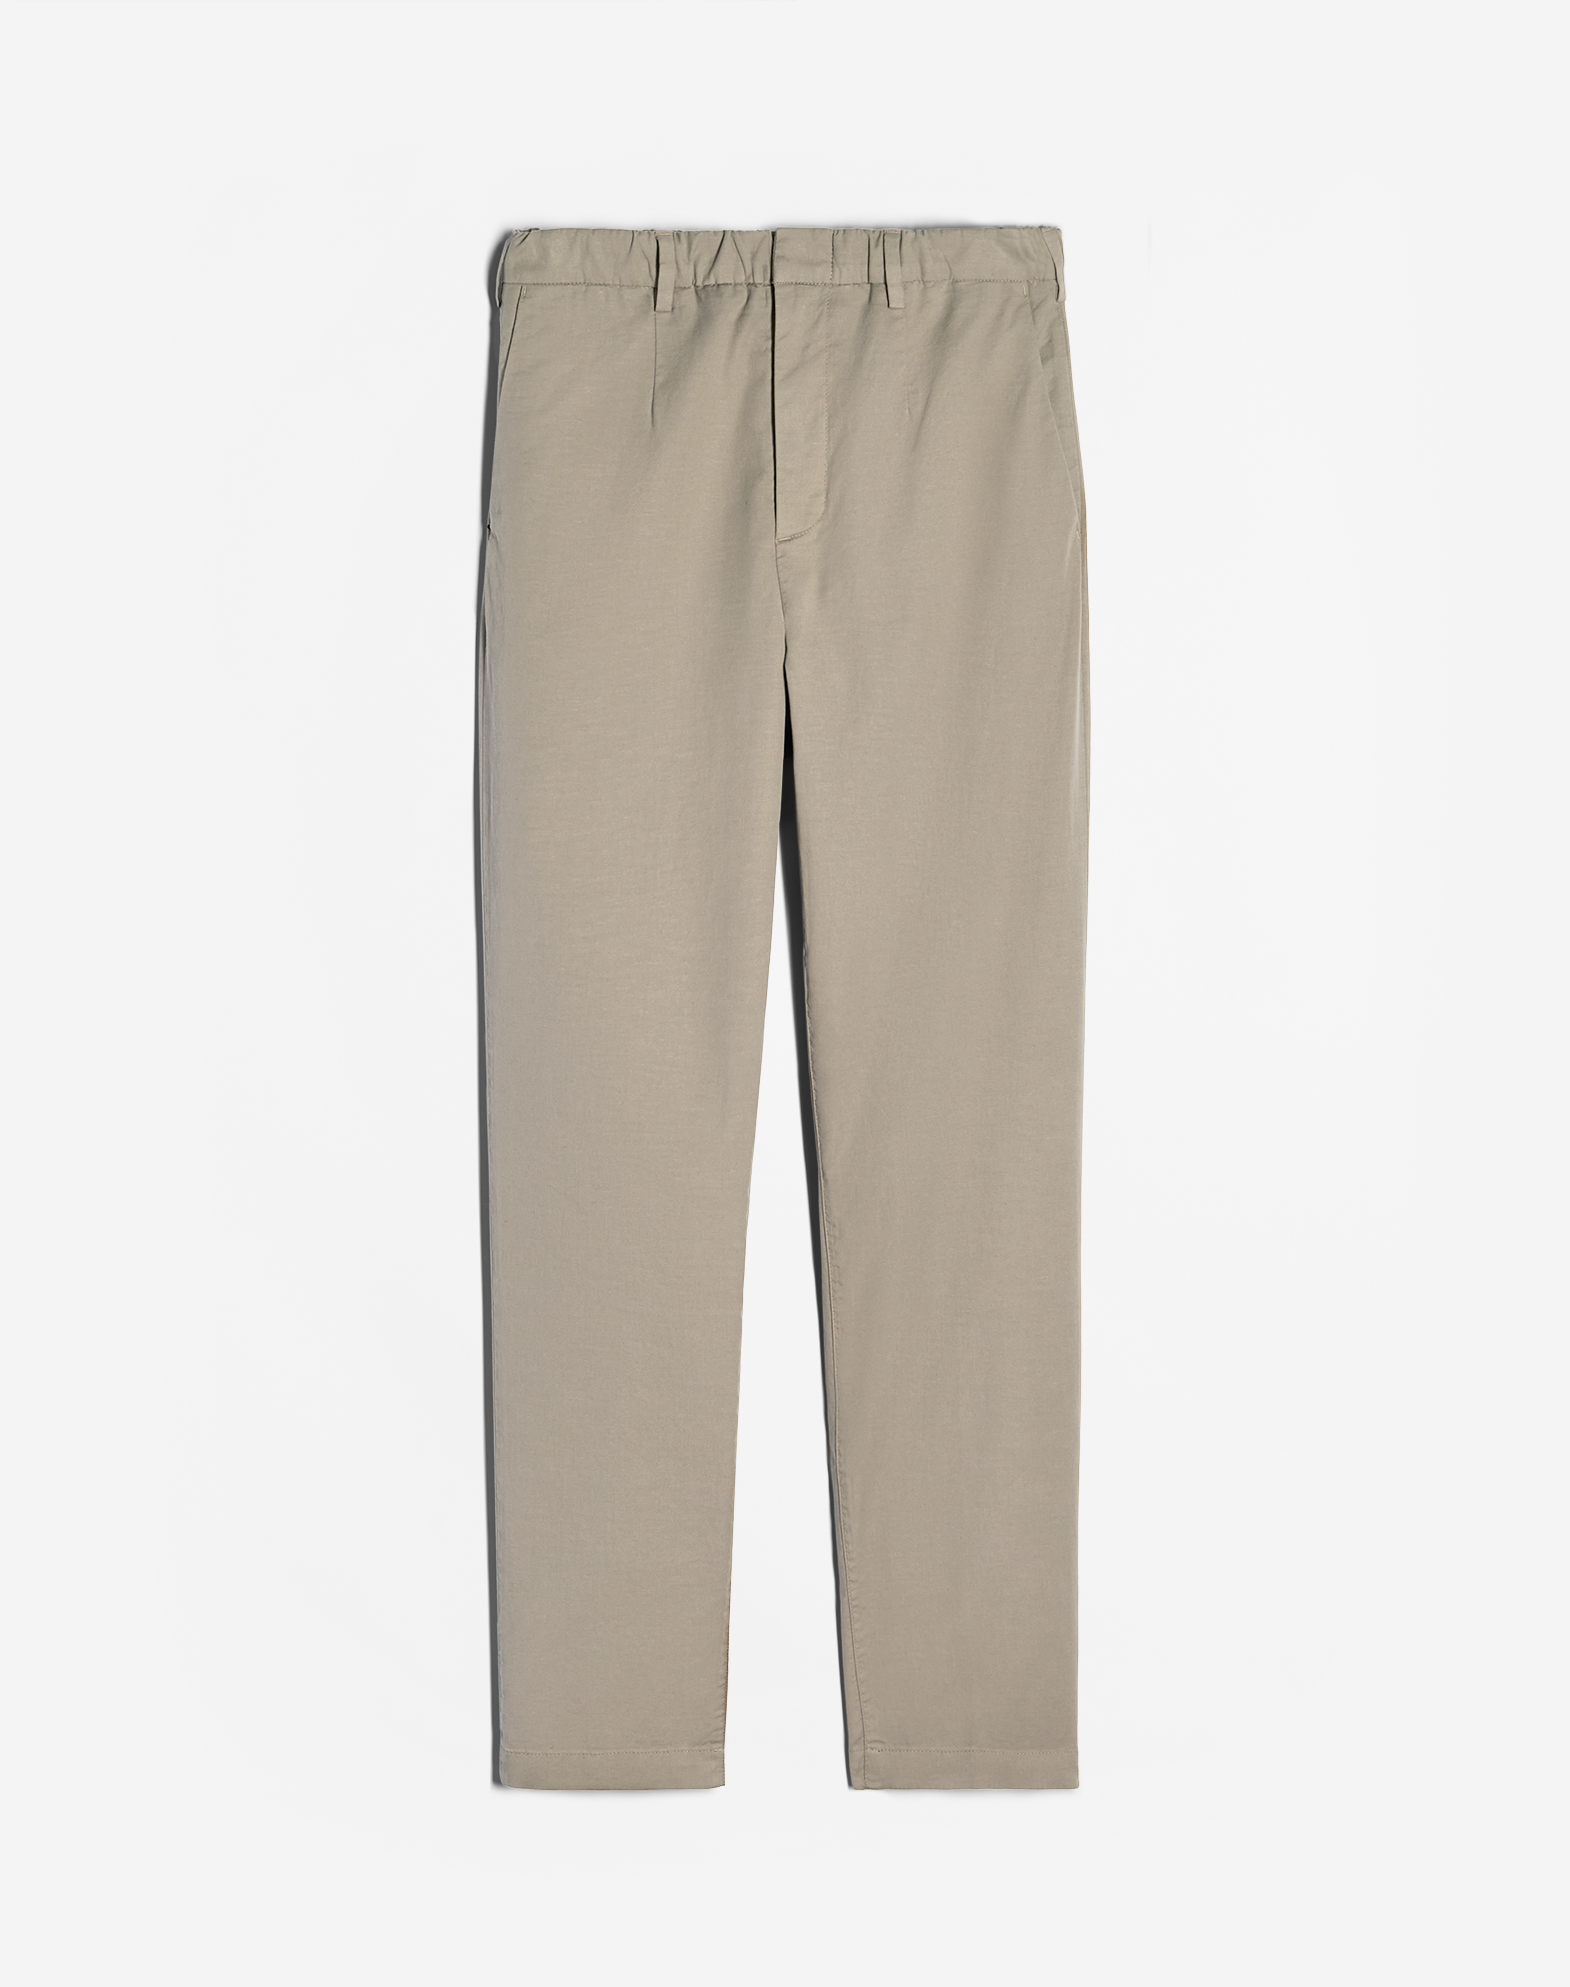 Dunhill Men's Pantalons Habillés